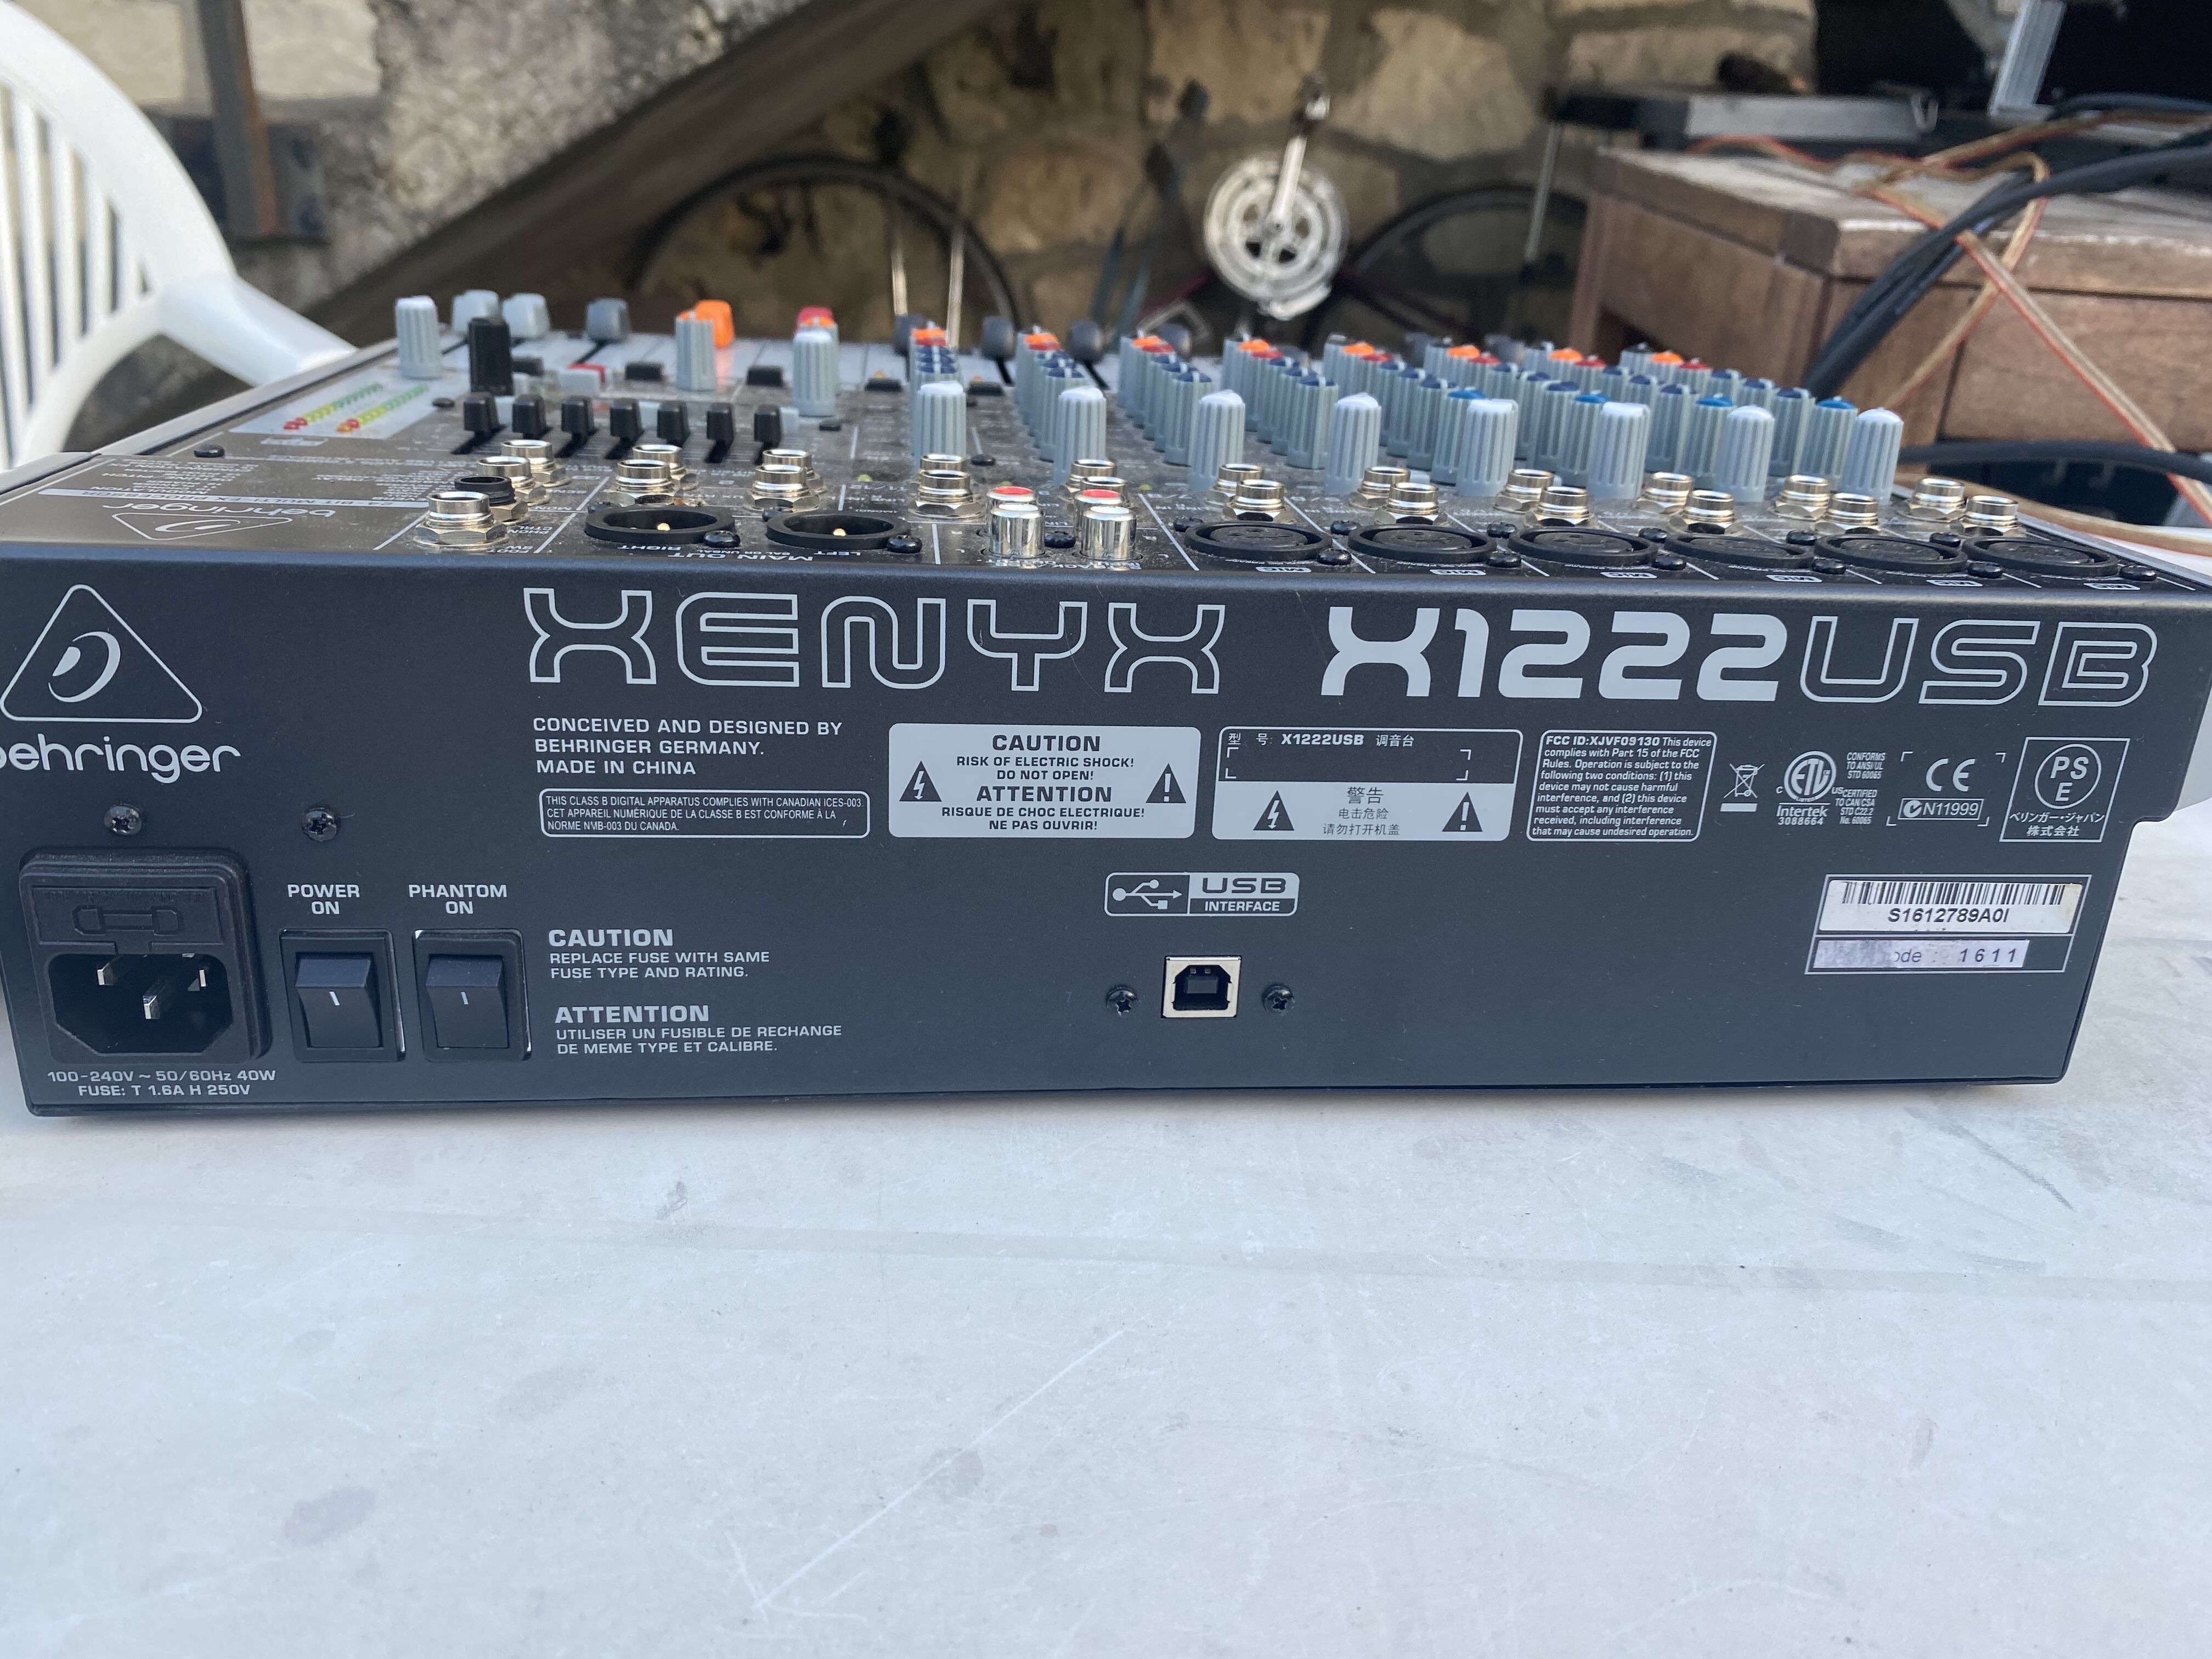 Table de mixage BEHRINGER XENYX X1222 USB